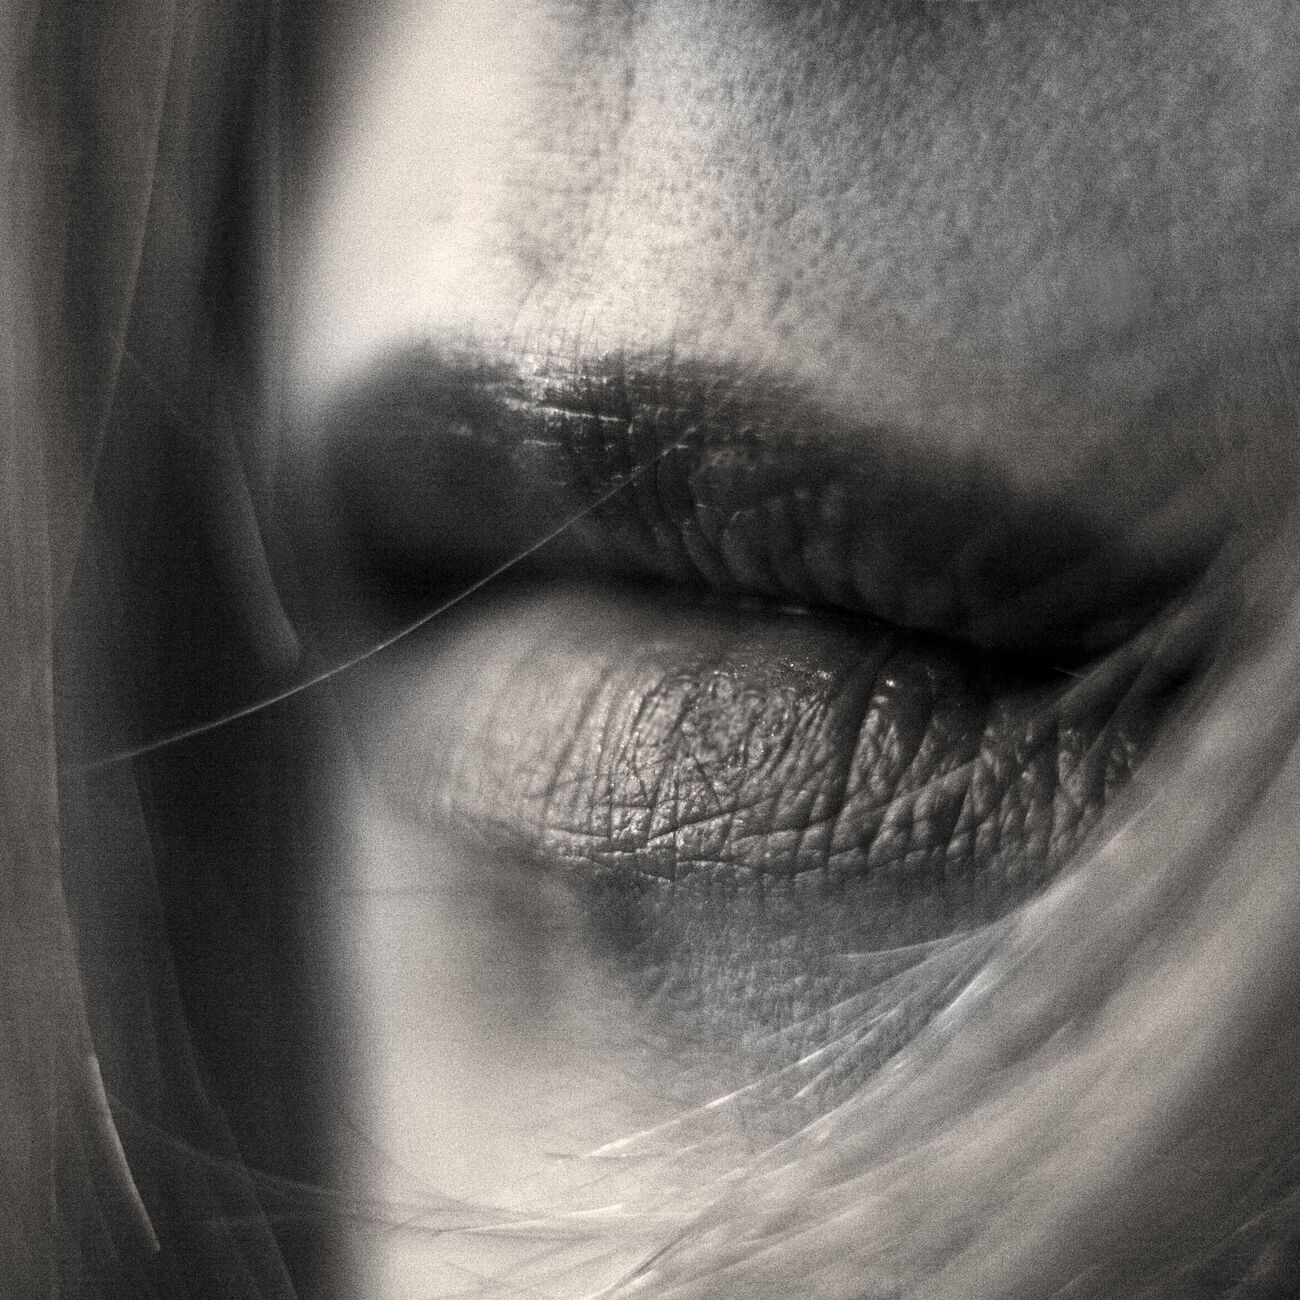 Commander un tirage 13 x 13 cm, Sweet on her lips. Ref-580-19 - Denis Olivier Photographie d'Art